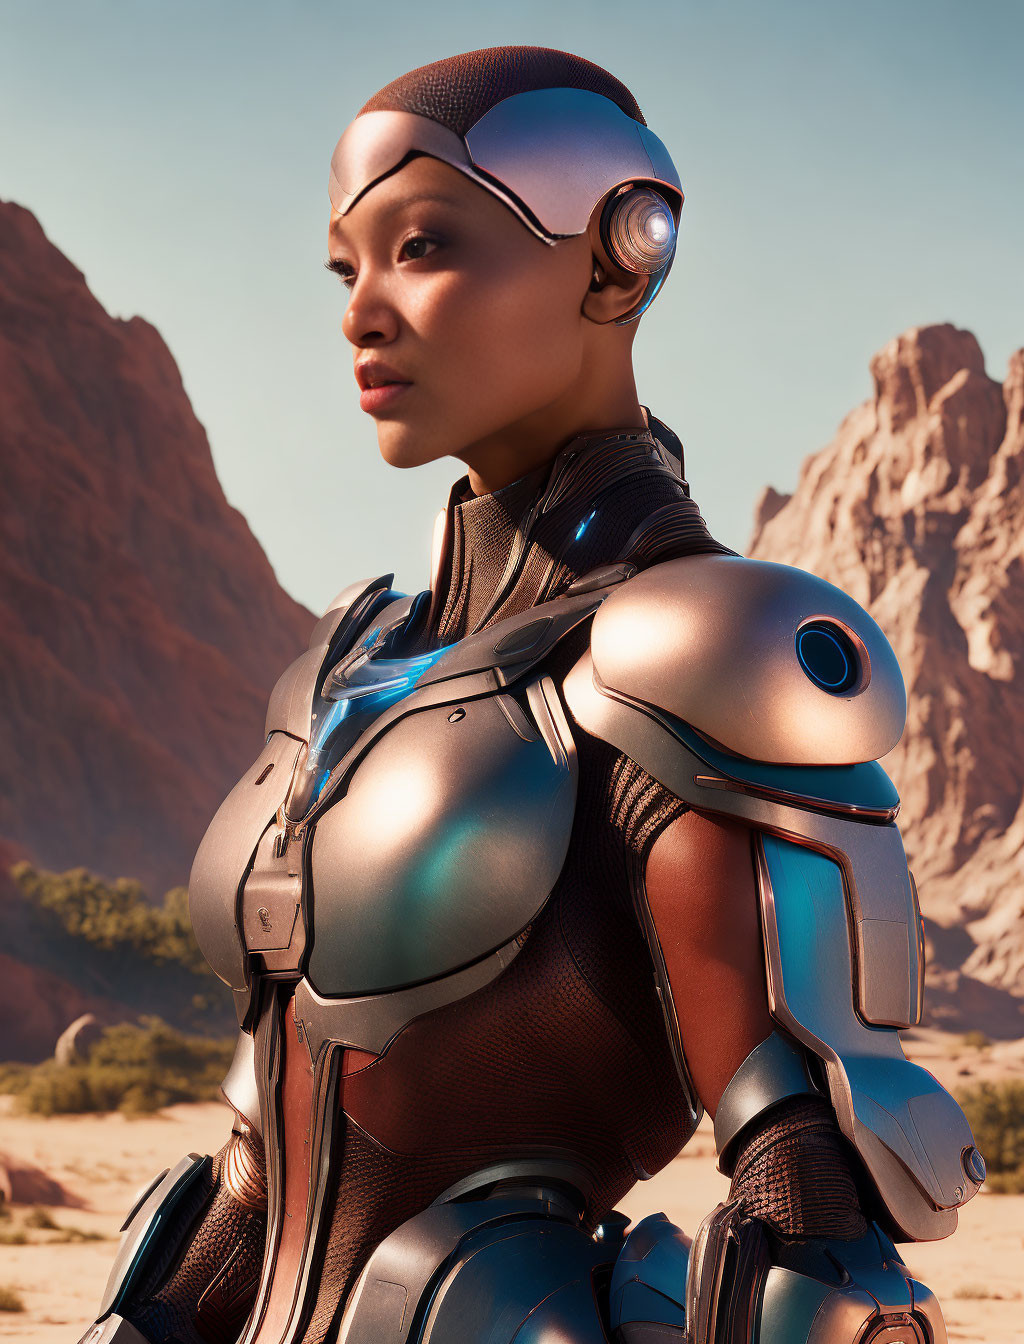 Futuristic female figure in sleek armor with high-tech helmet in desert landscape